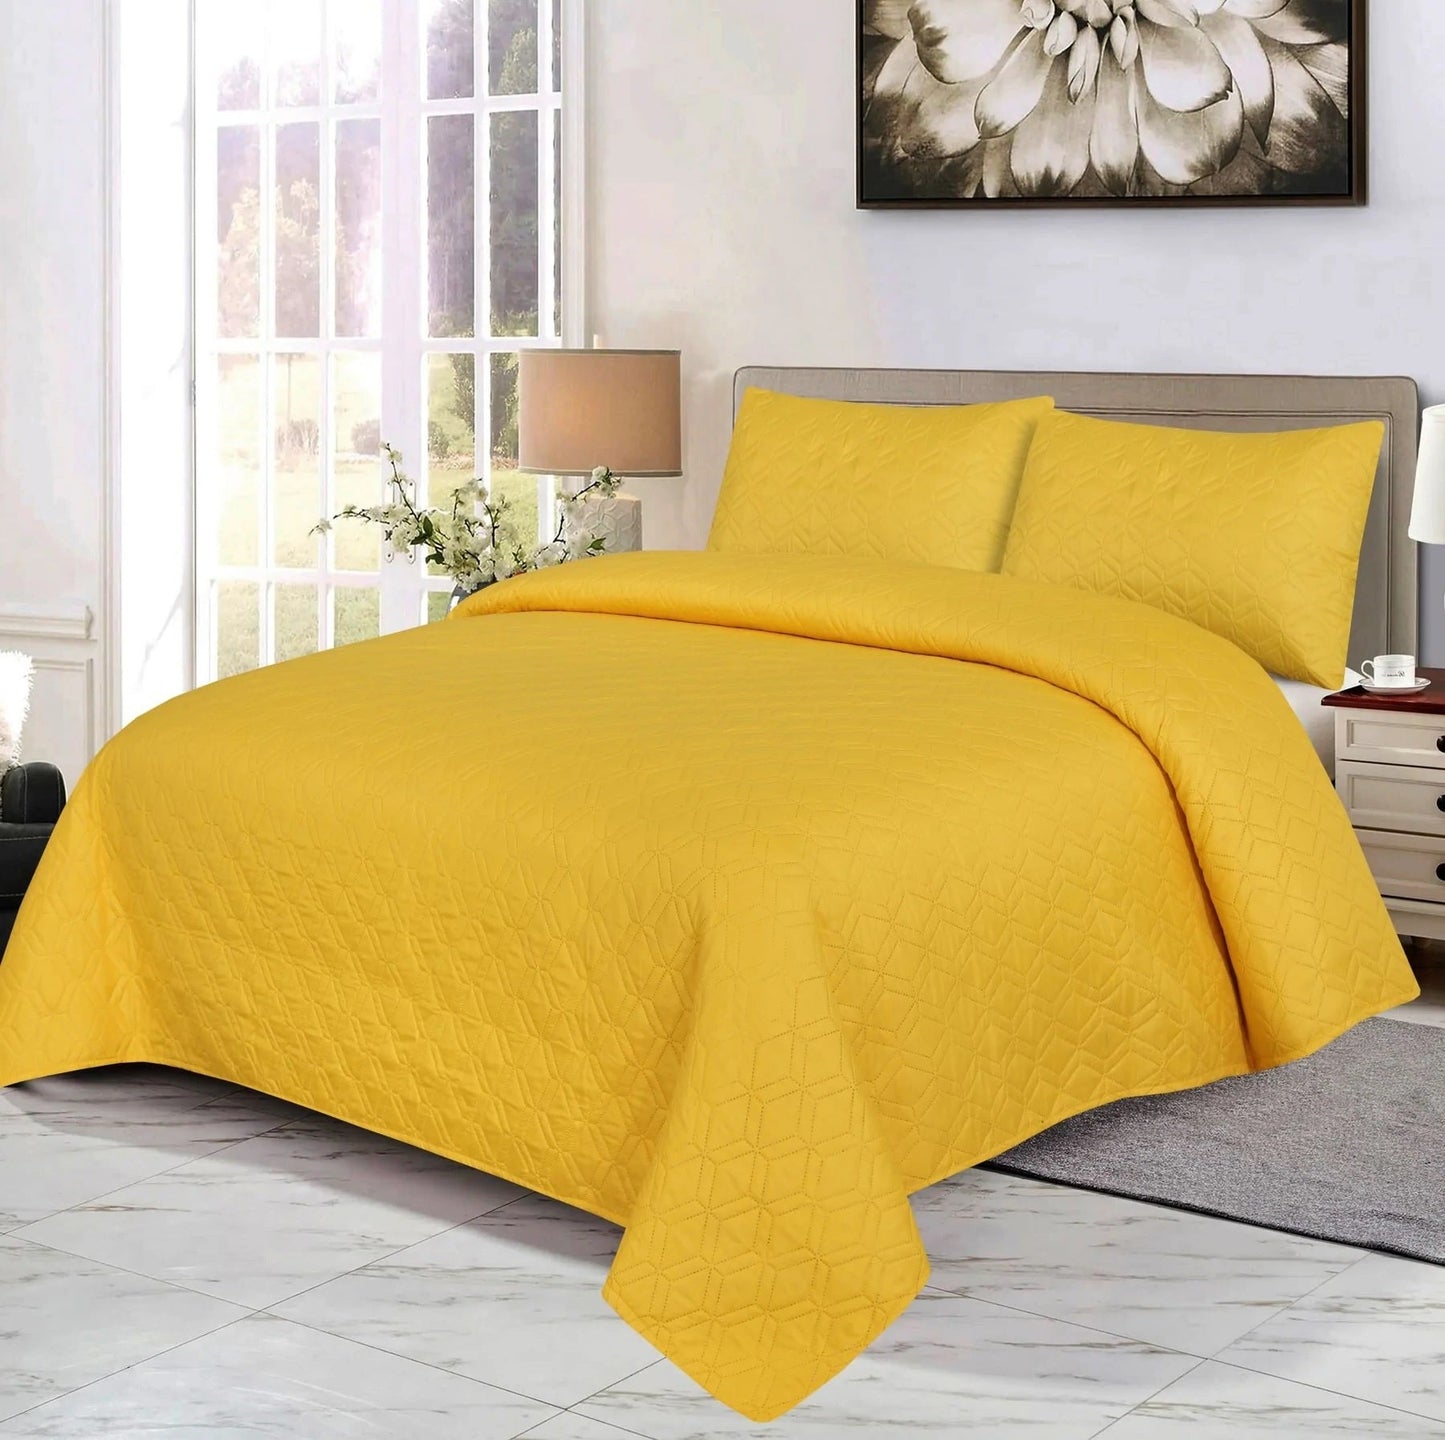 Premium Bedspread Yellowish - 3pcs Set #9342